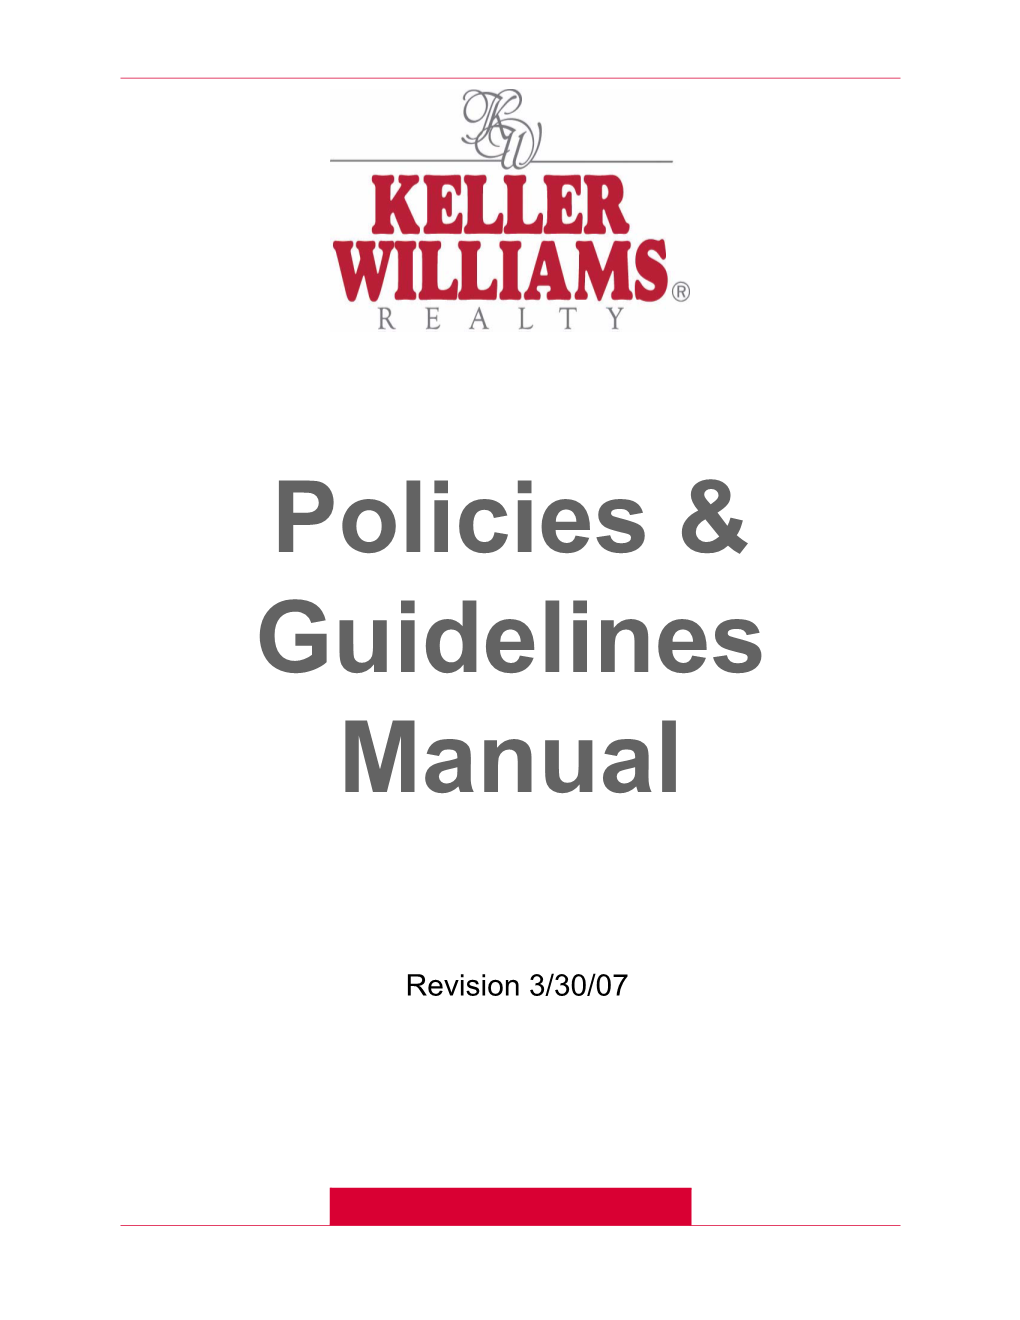 Policies & Guidelines Manual